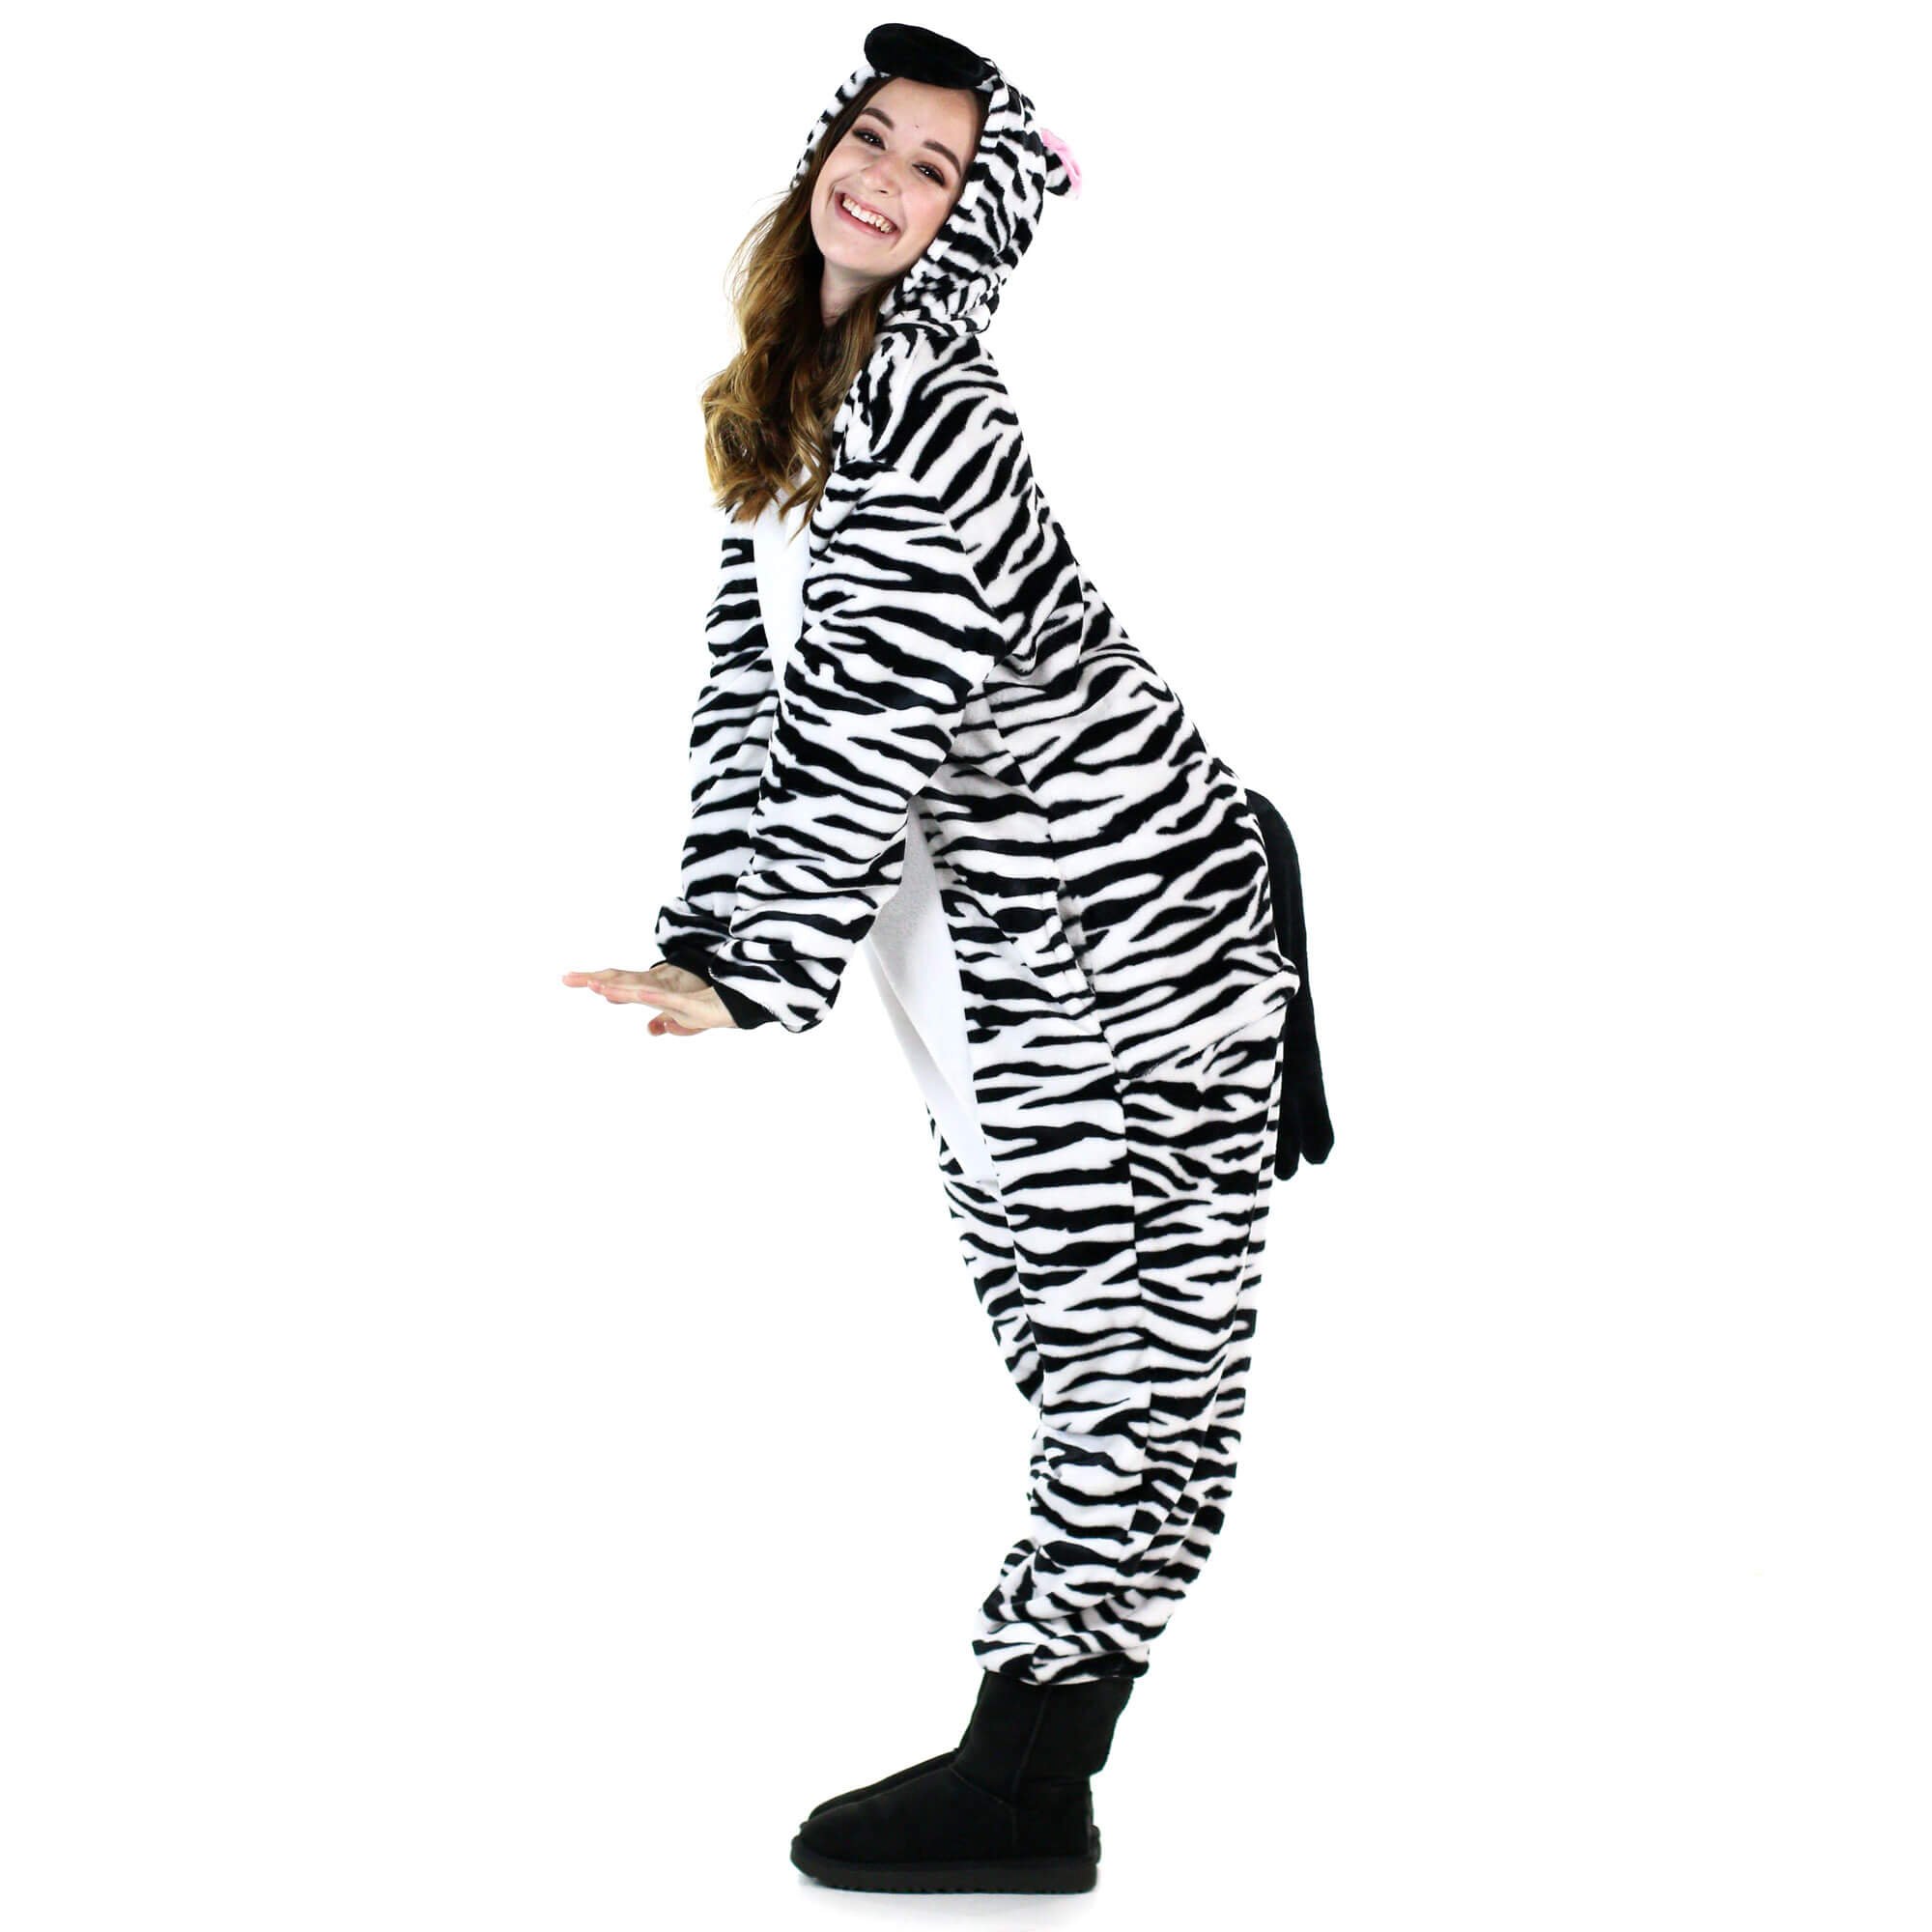 Danzcue Adult Zebra Onesie Pajamas Costume - Click Image to Close